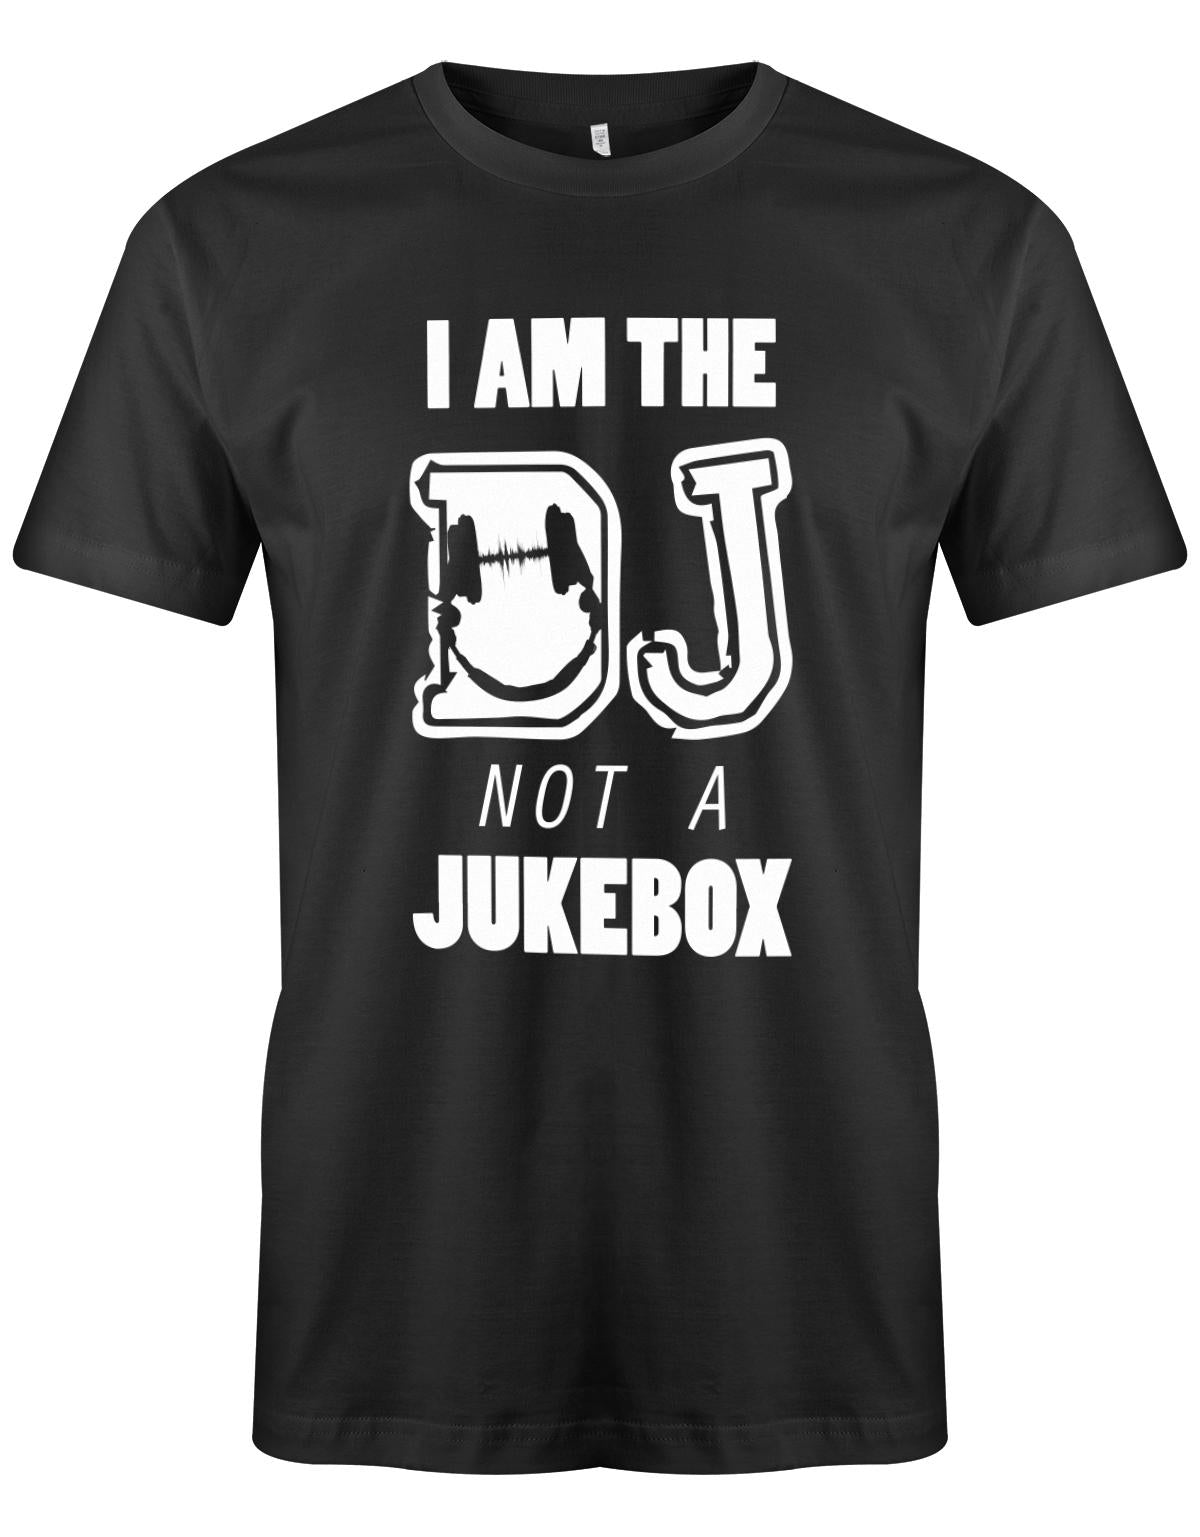 I-am-the-DJ-not-a-JUkebox-Herren-SChwarz